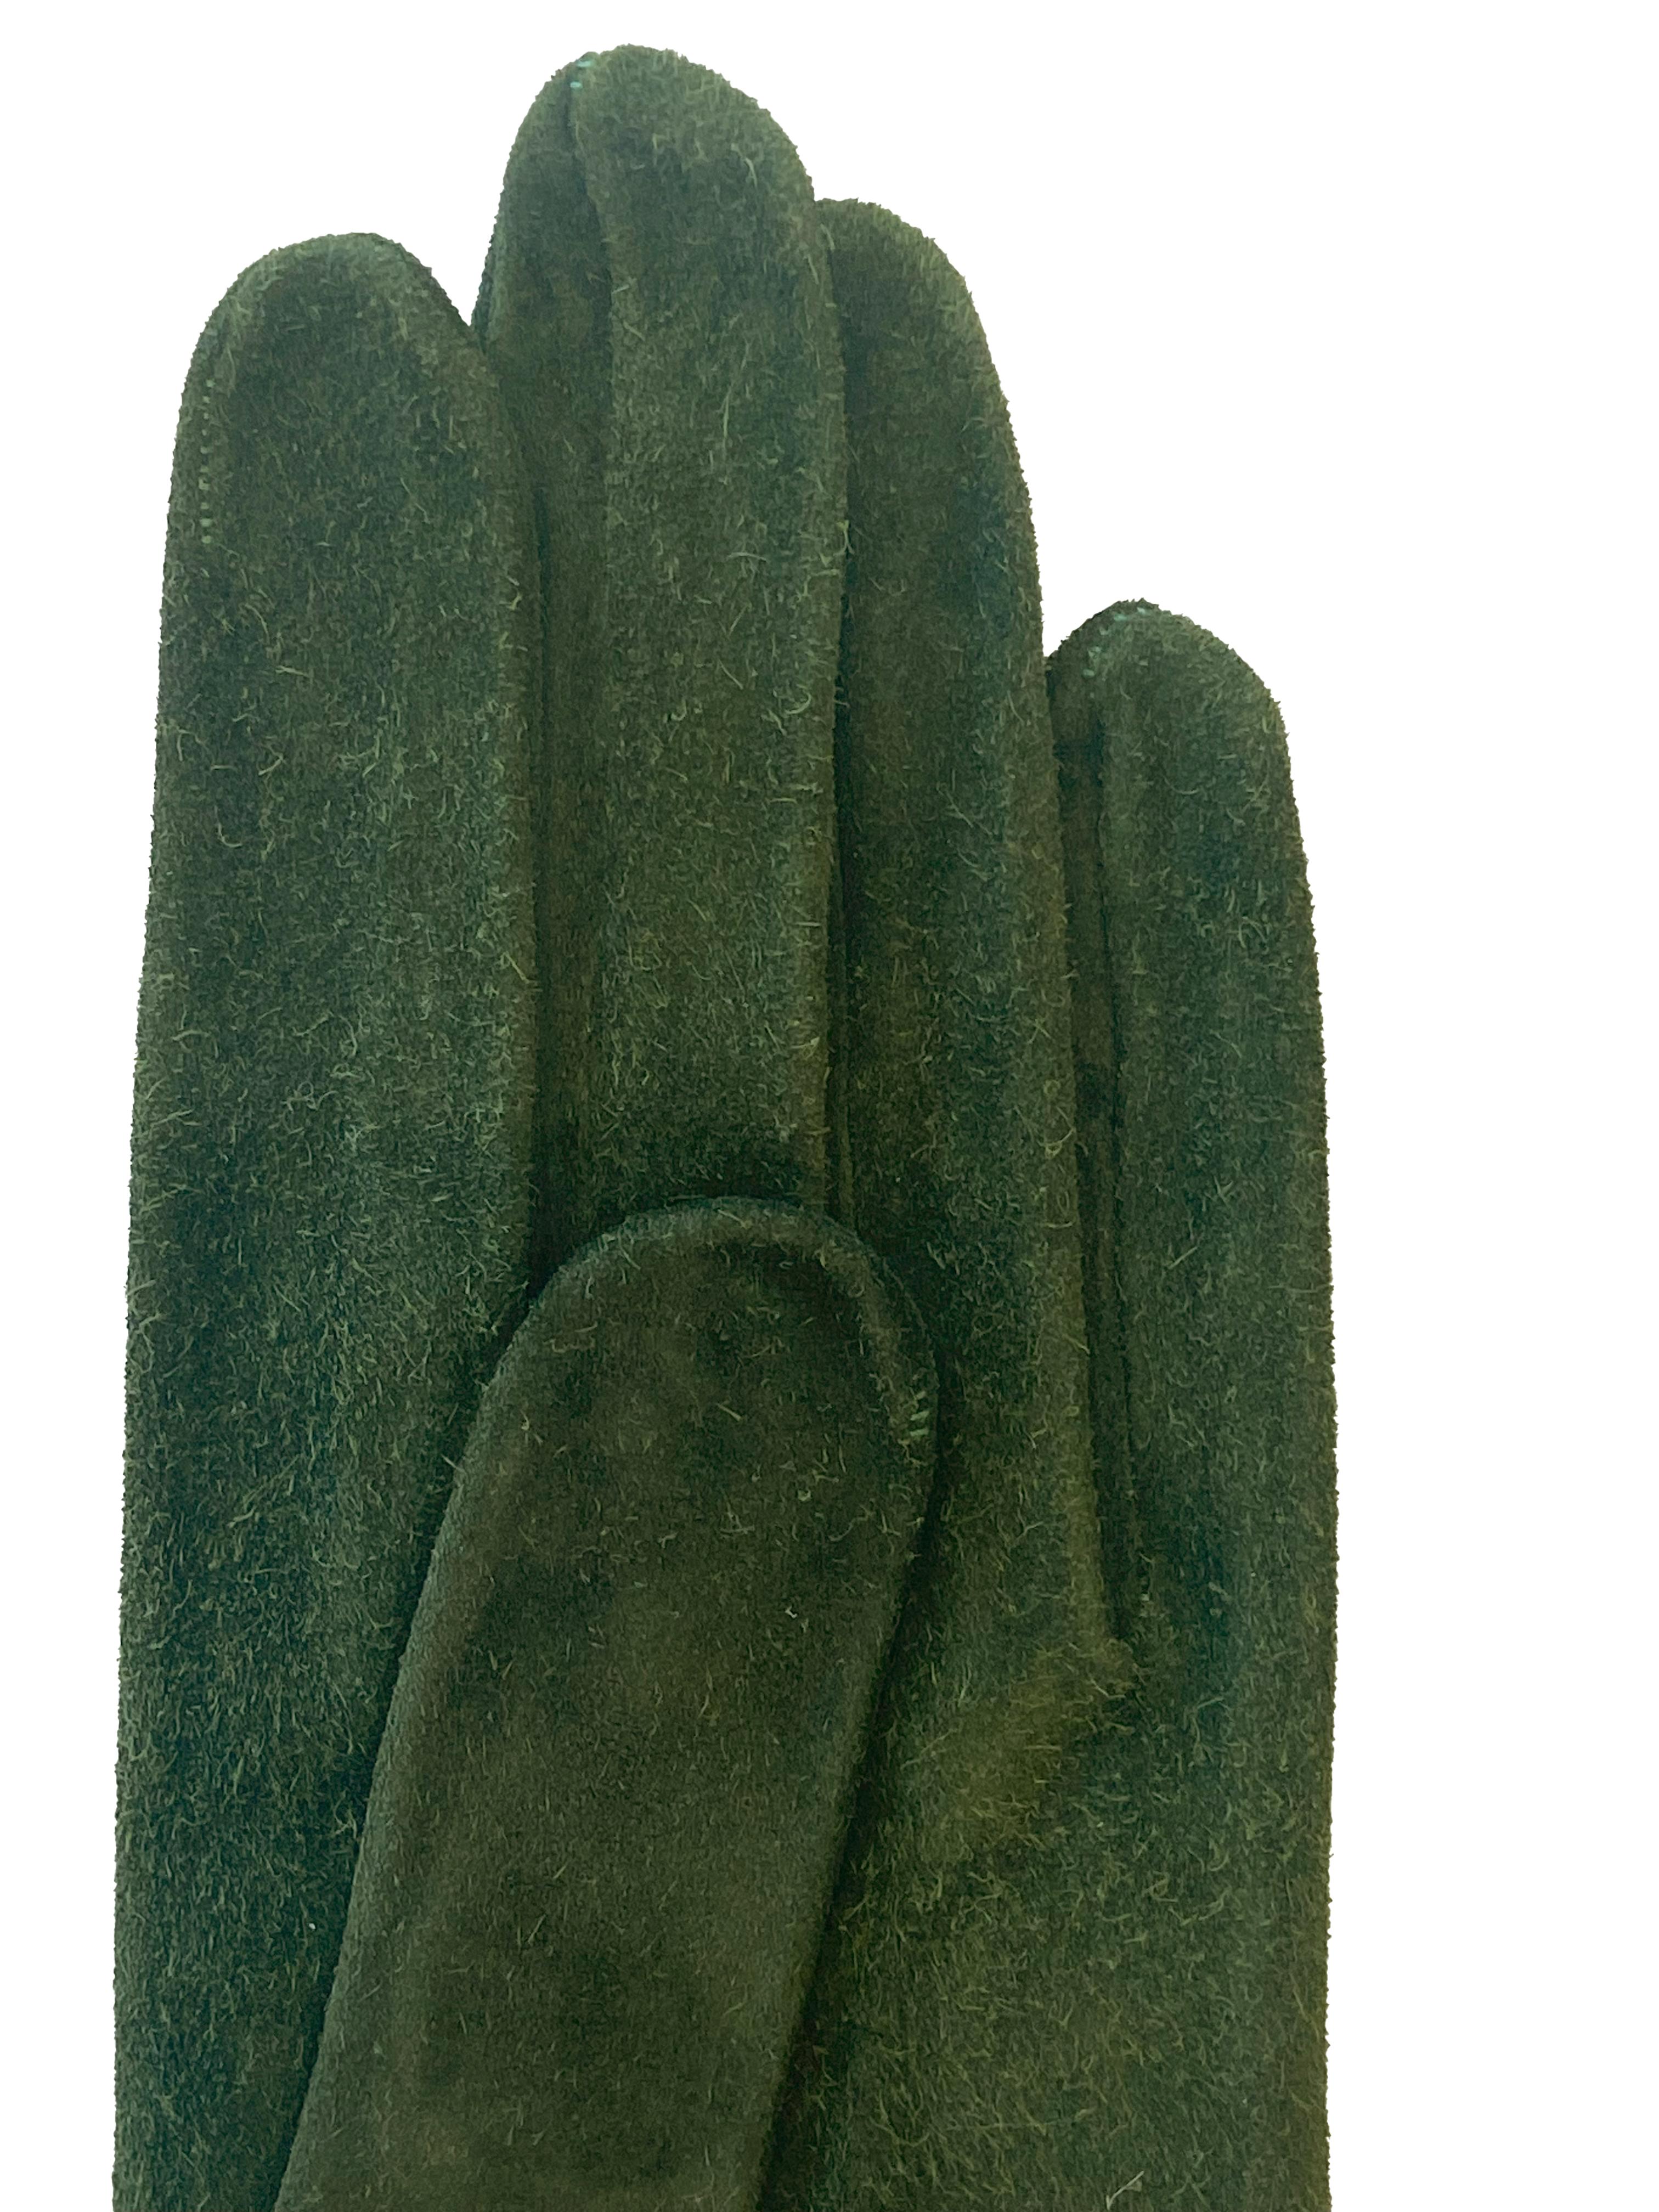 Hermes Forest Green Suede Gloves with Gold Chains & Tassels 7 1/2 Unworn 1